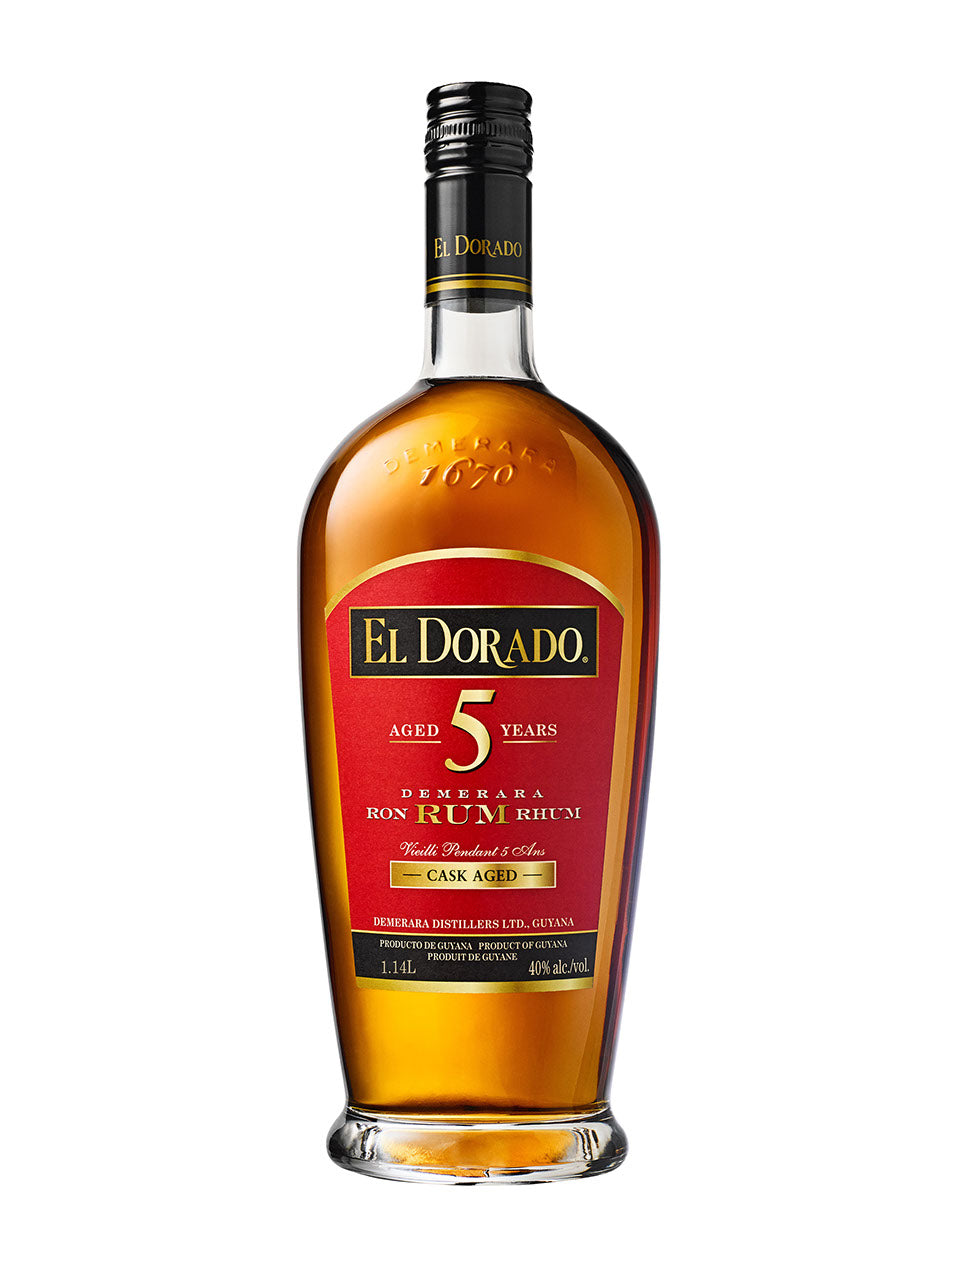 El Dorado 5 Year Old Rum 1140 mL bottle